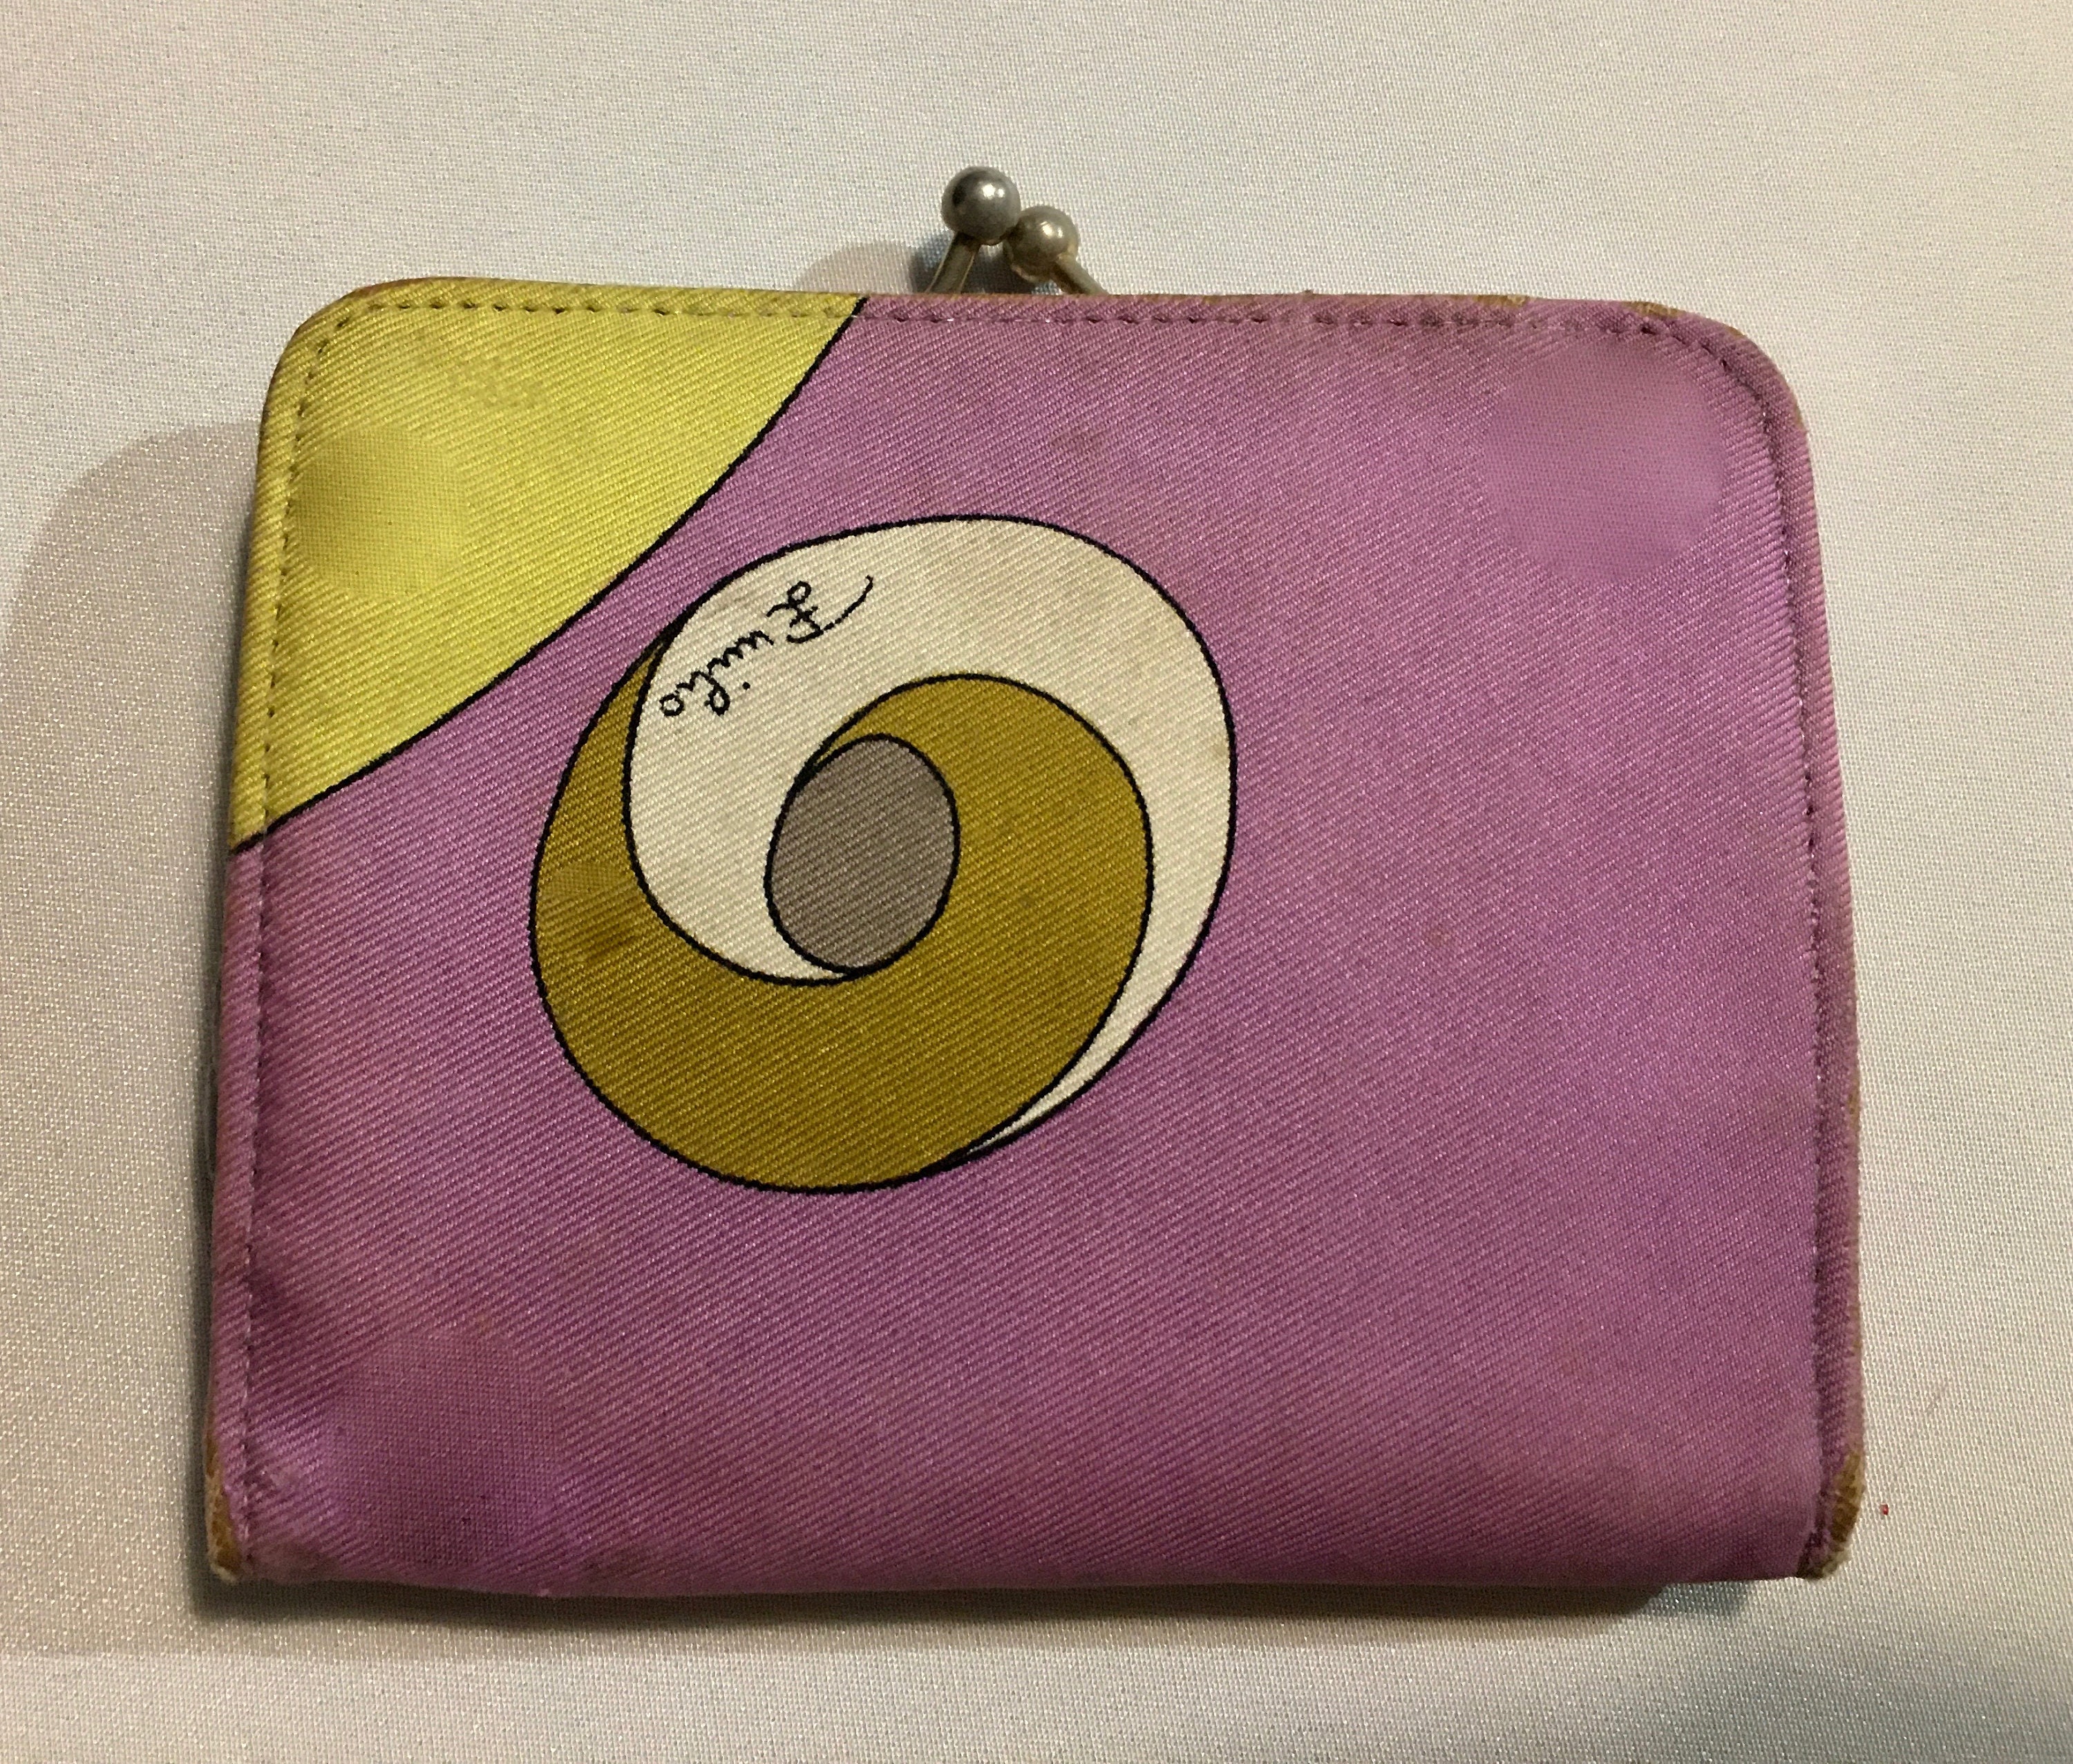 Vintage 70s Emilio Pucci clutch bag, folding, psychedelic print